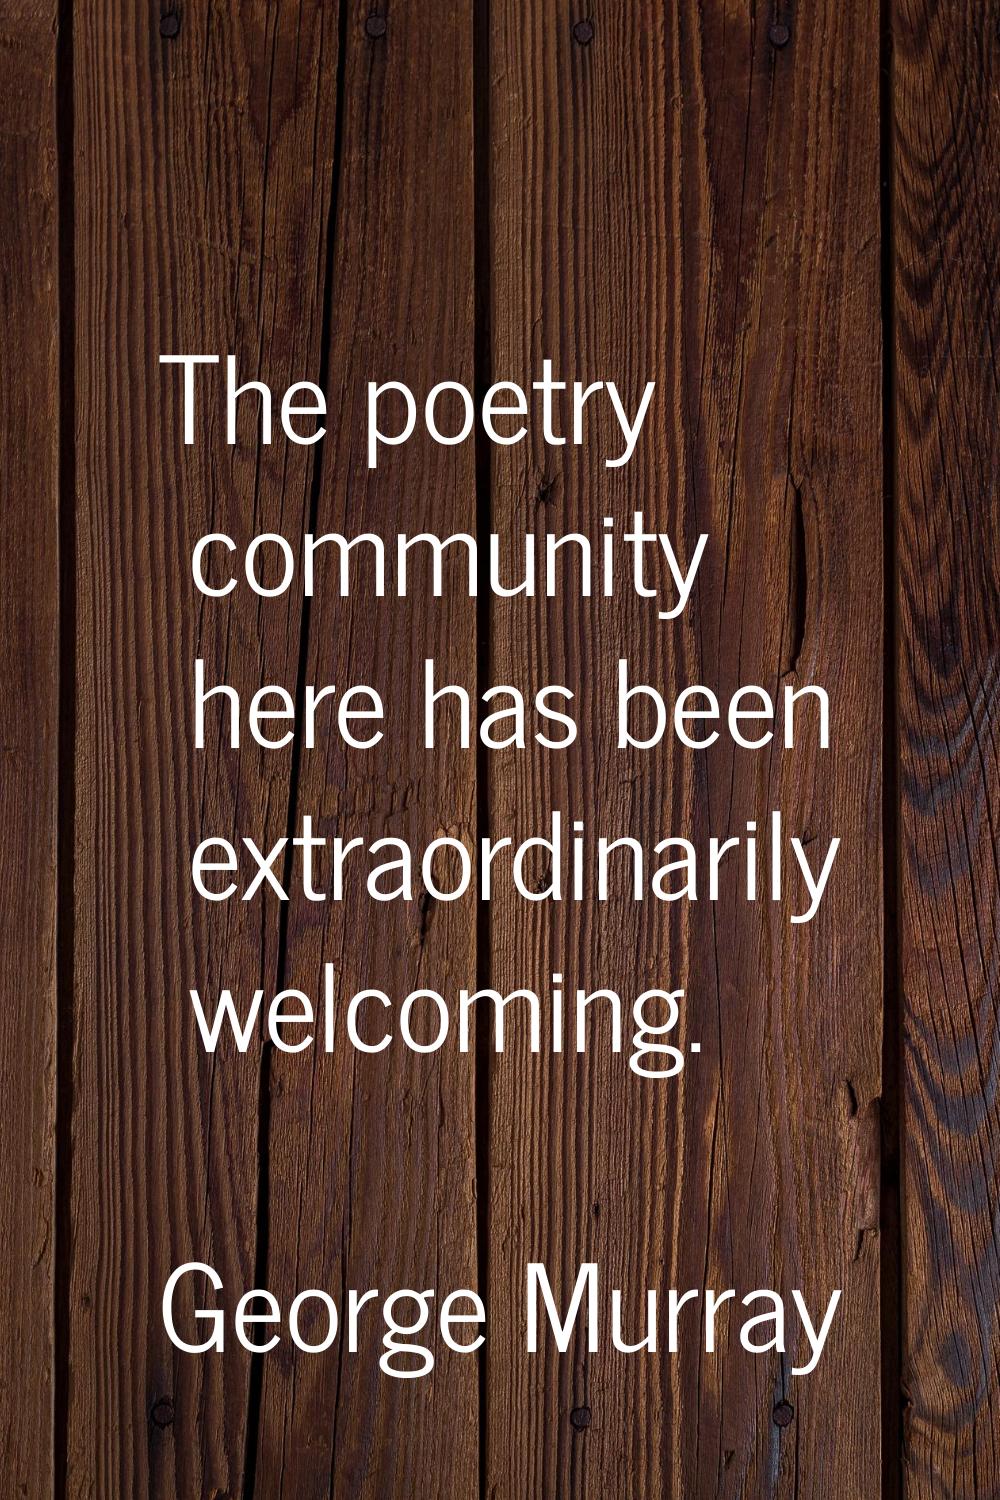 The poetry community here has been extraordinarily welcoming.